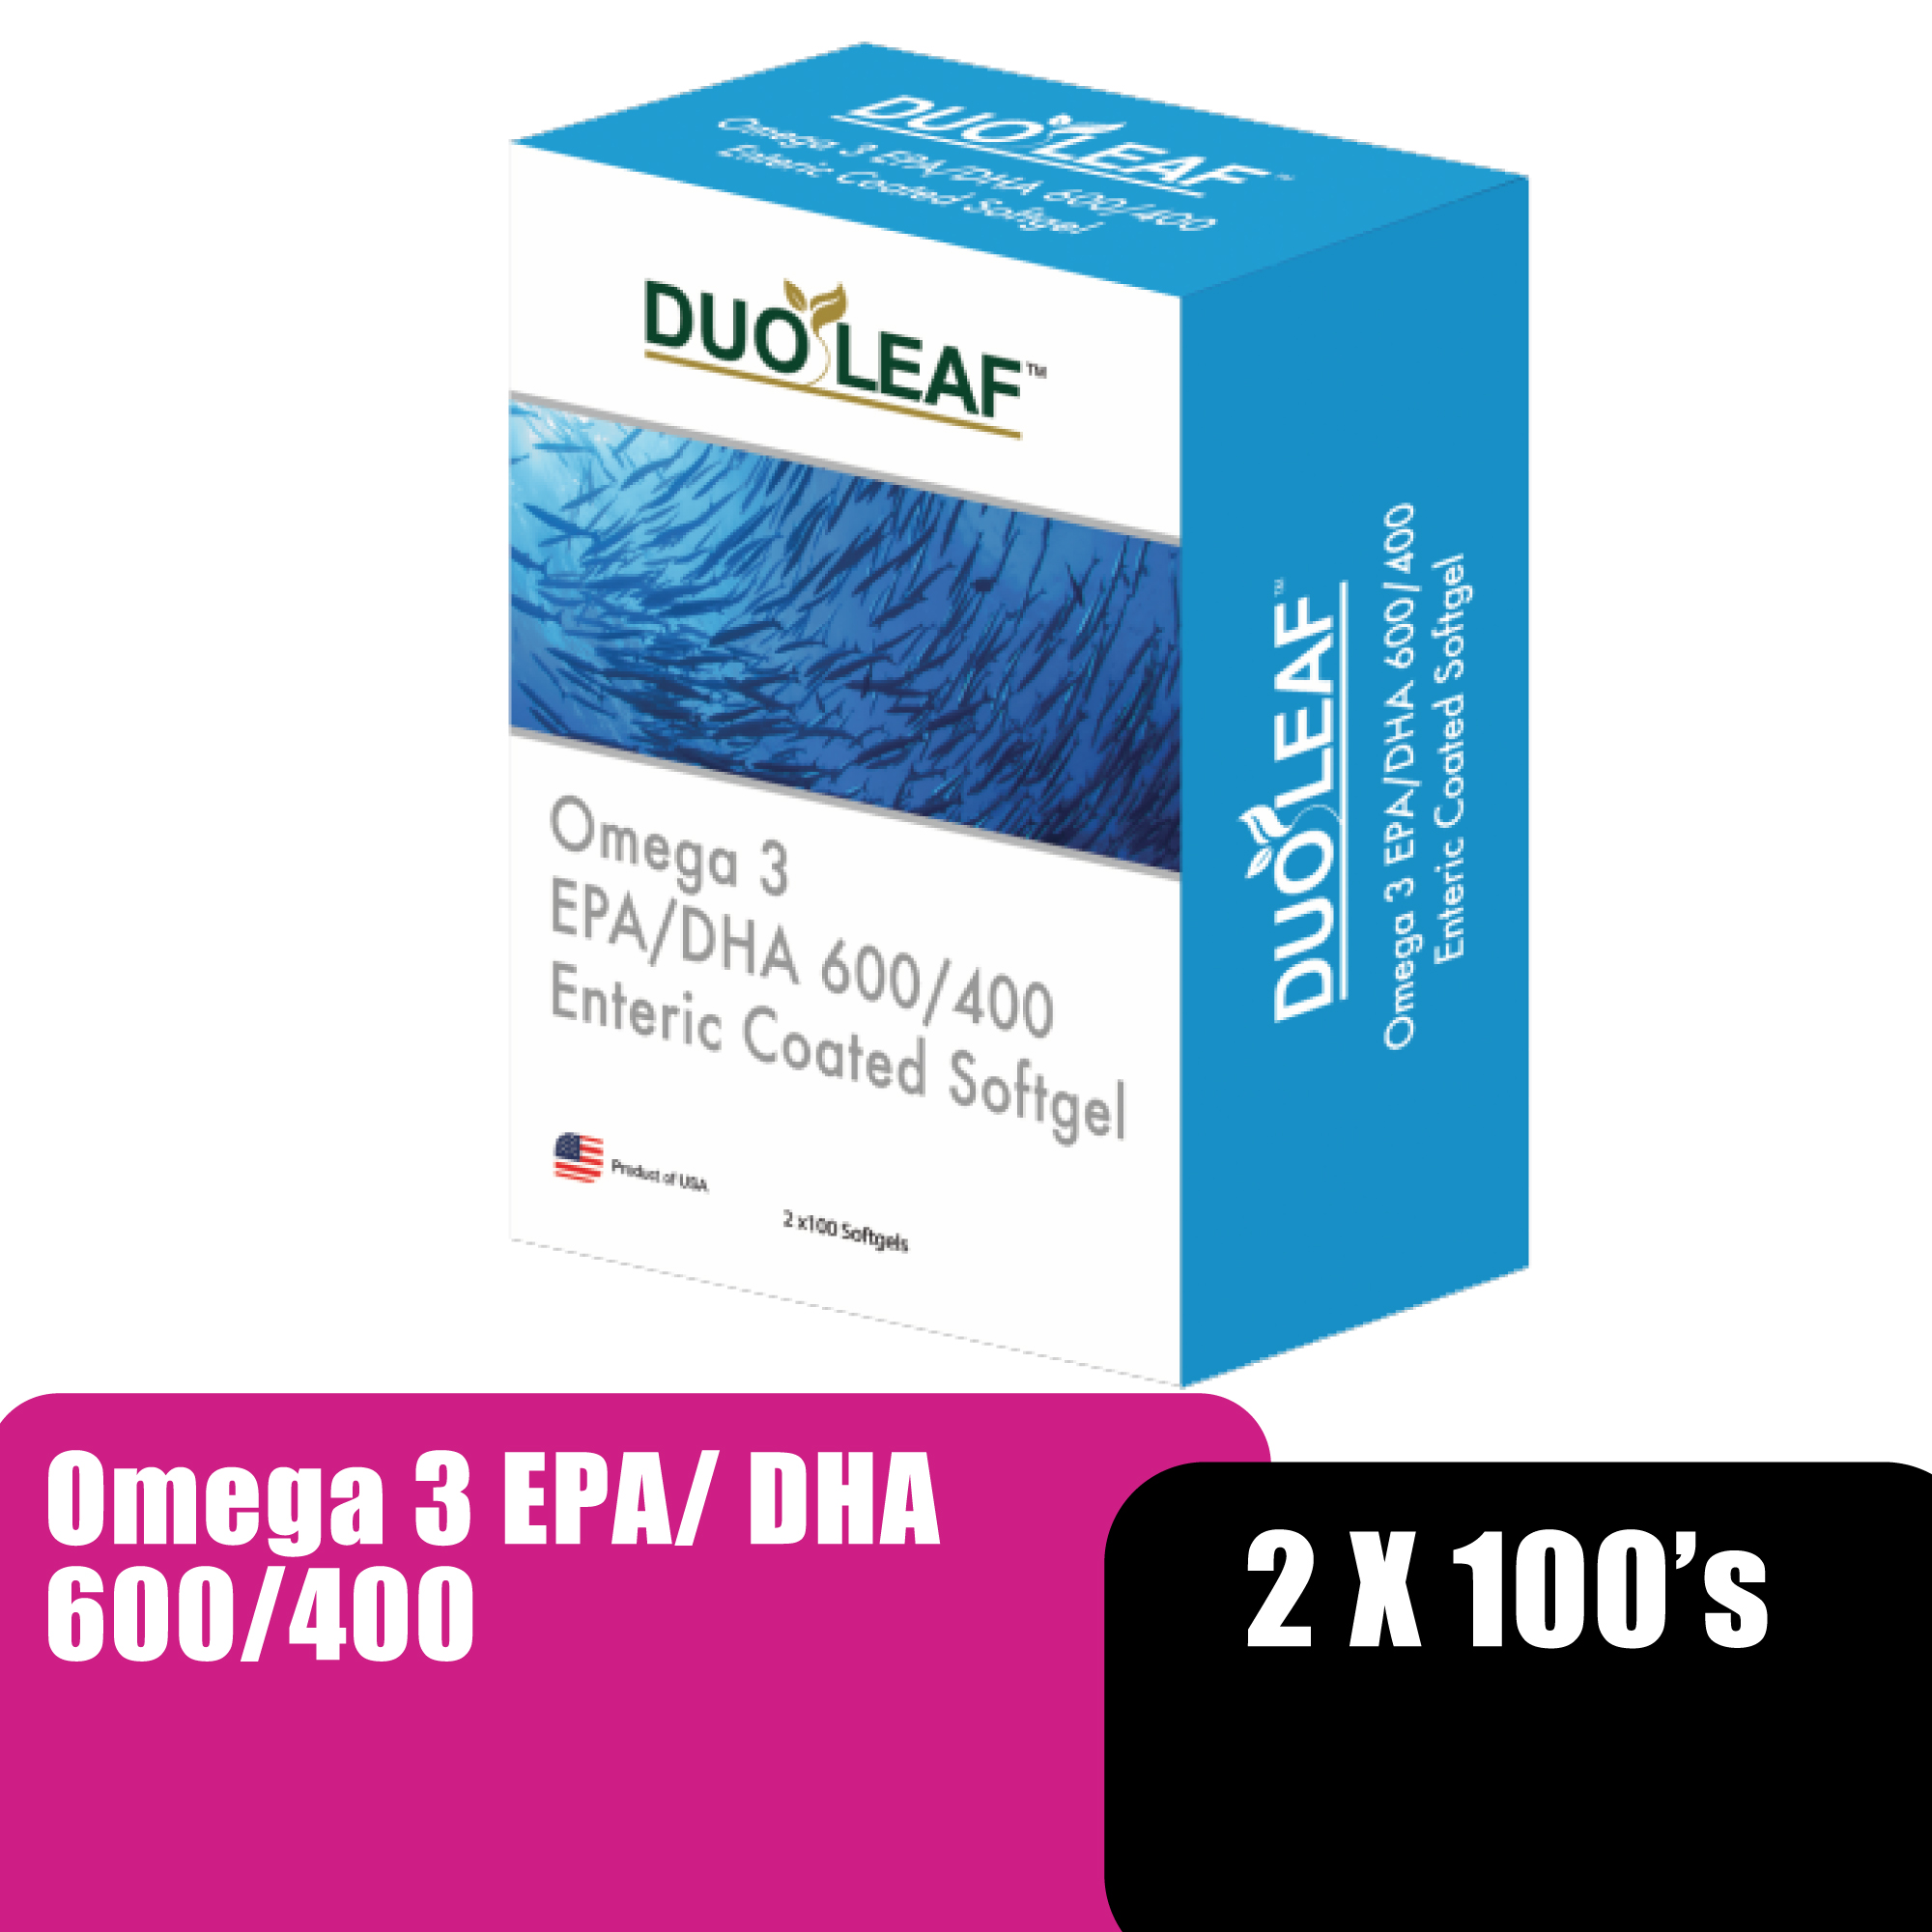 DUOLEAF OMEGA 3 (EPA/DHA 600/400) (ENTERIC COATED) 100'S X 2